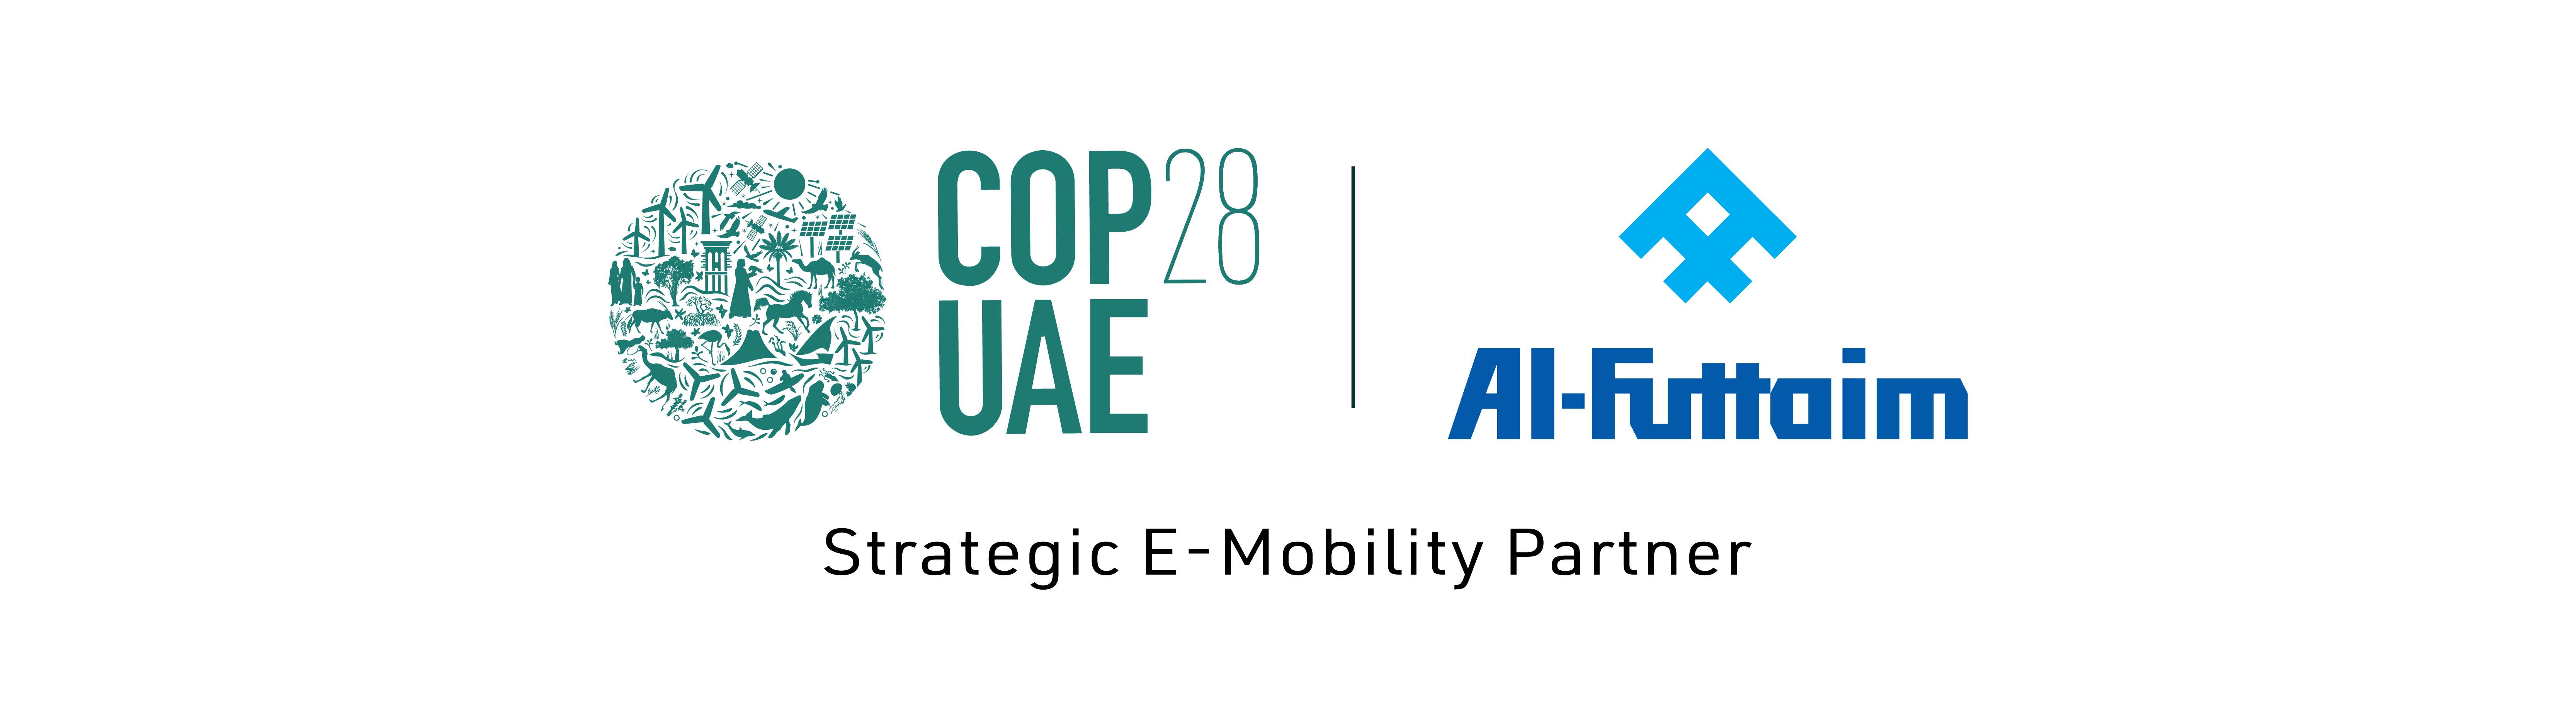 COP28: Al-Futtaim Group is the Strategic E-Mobility Partner